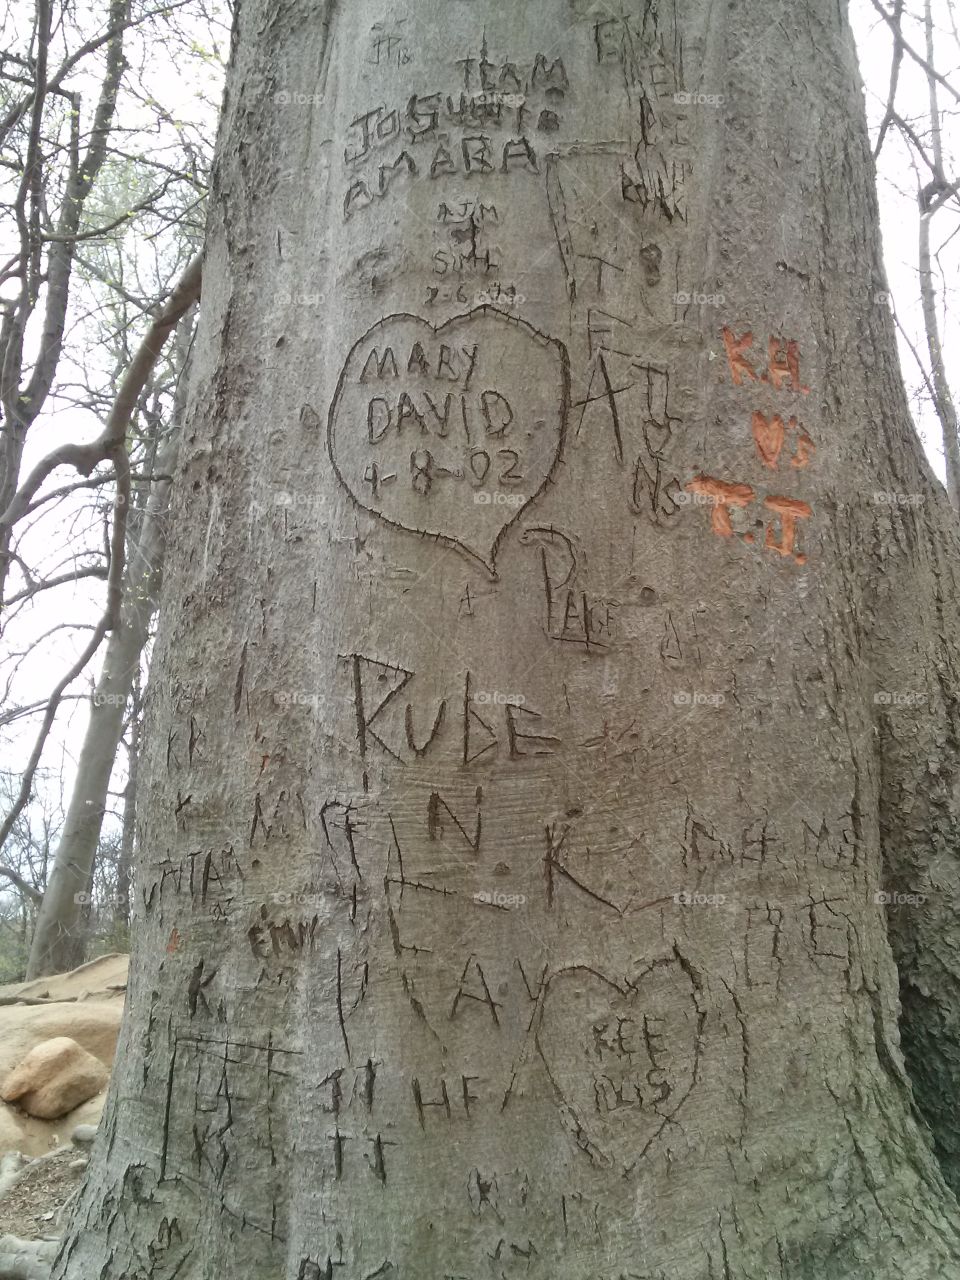 Tree of Love